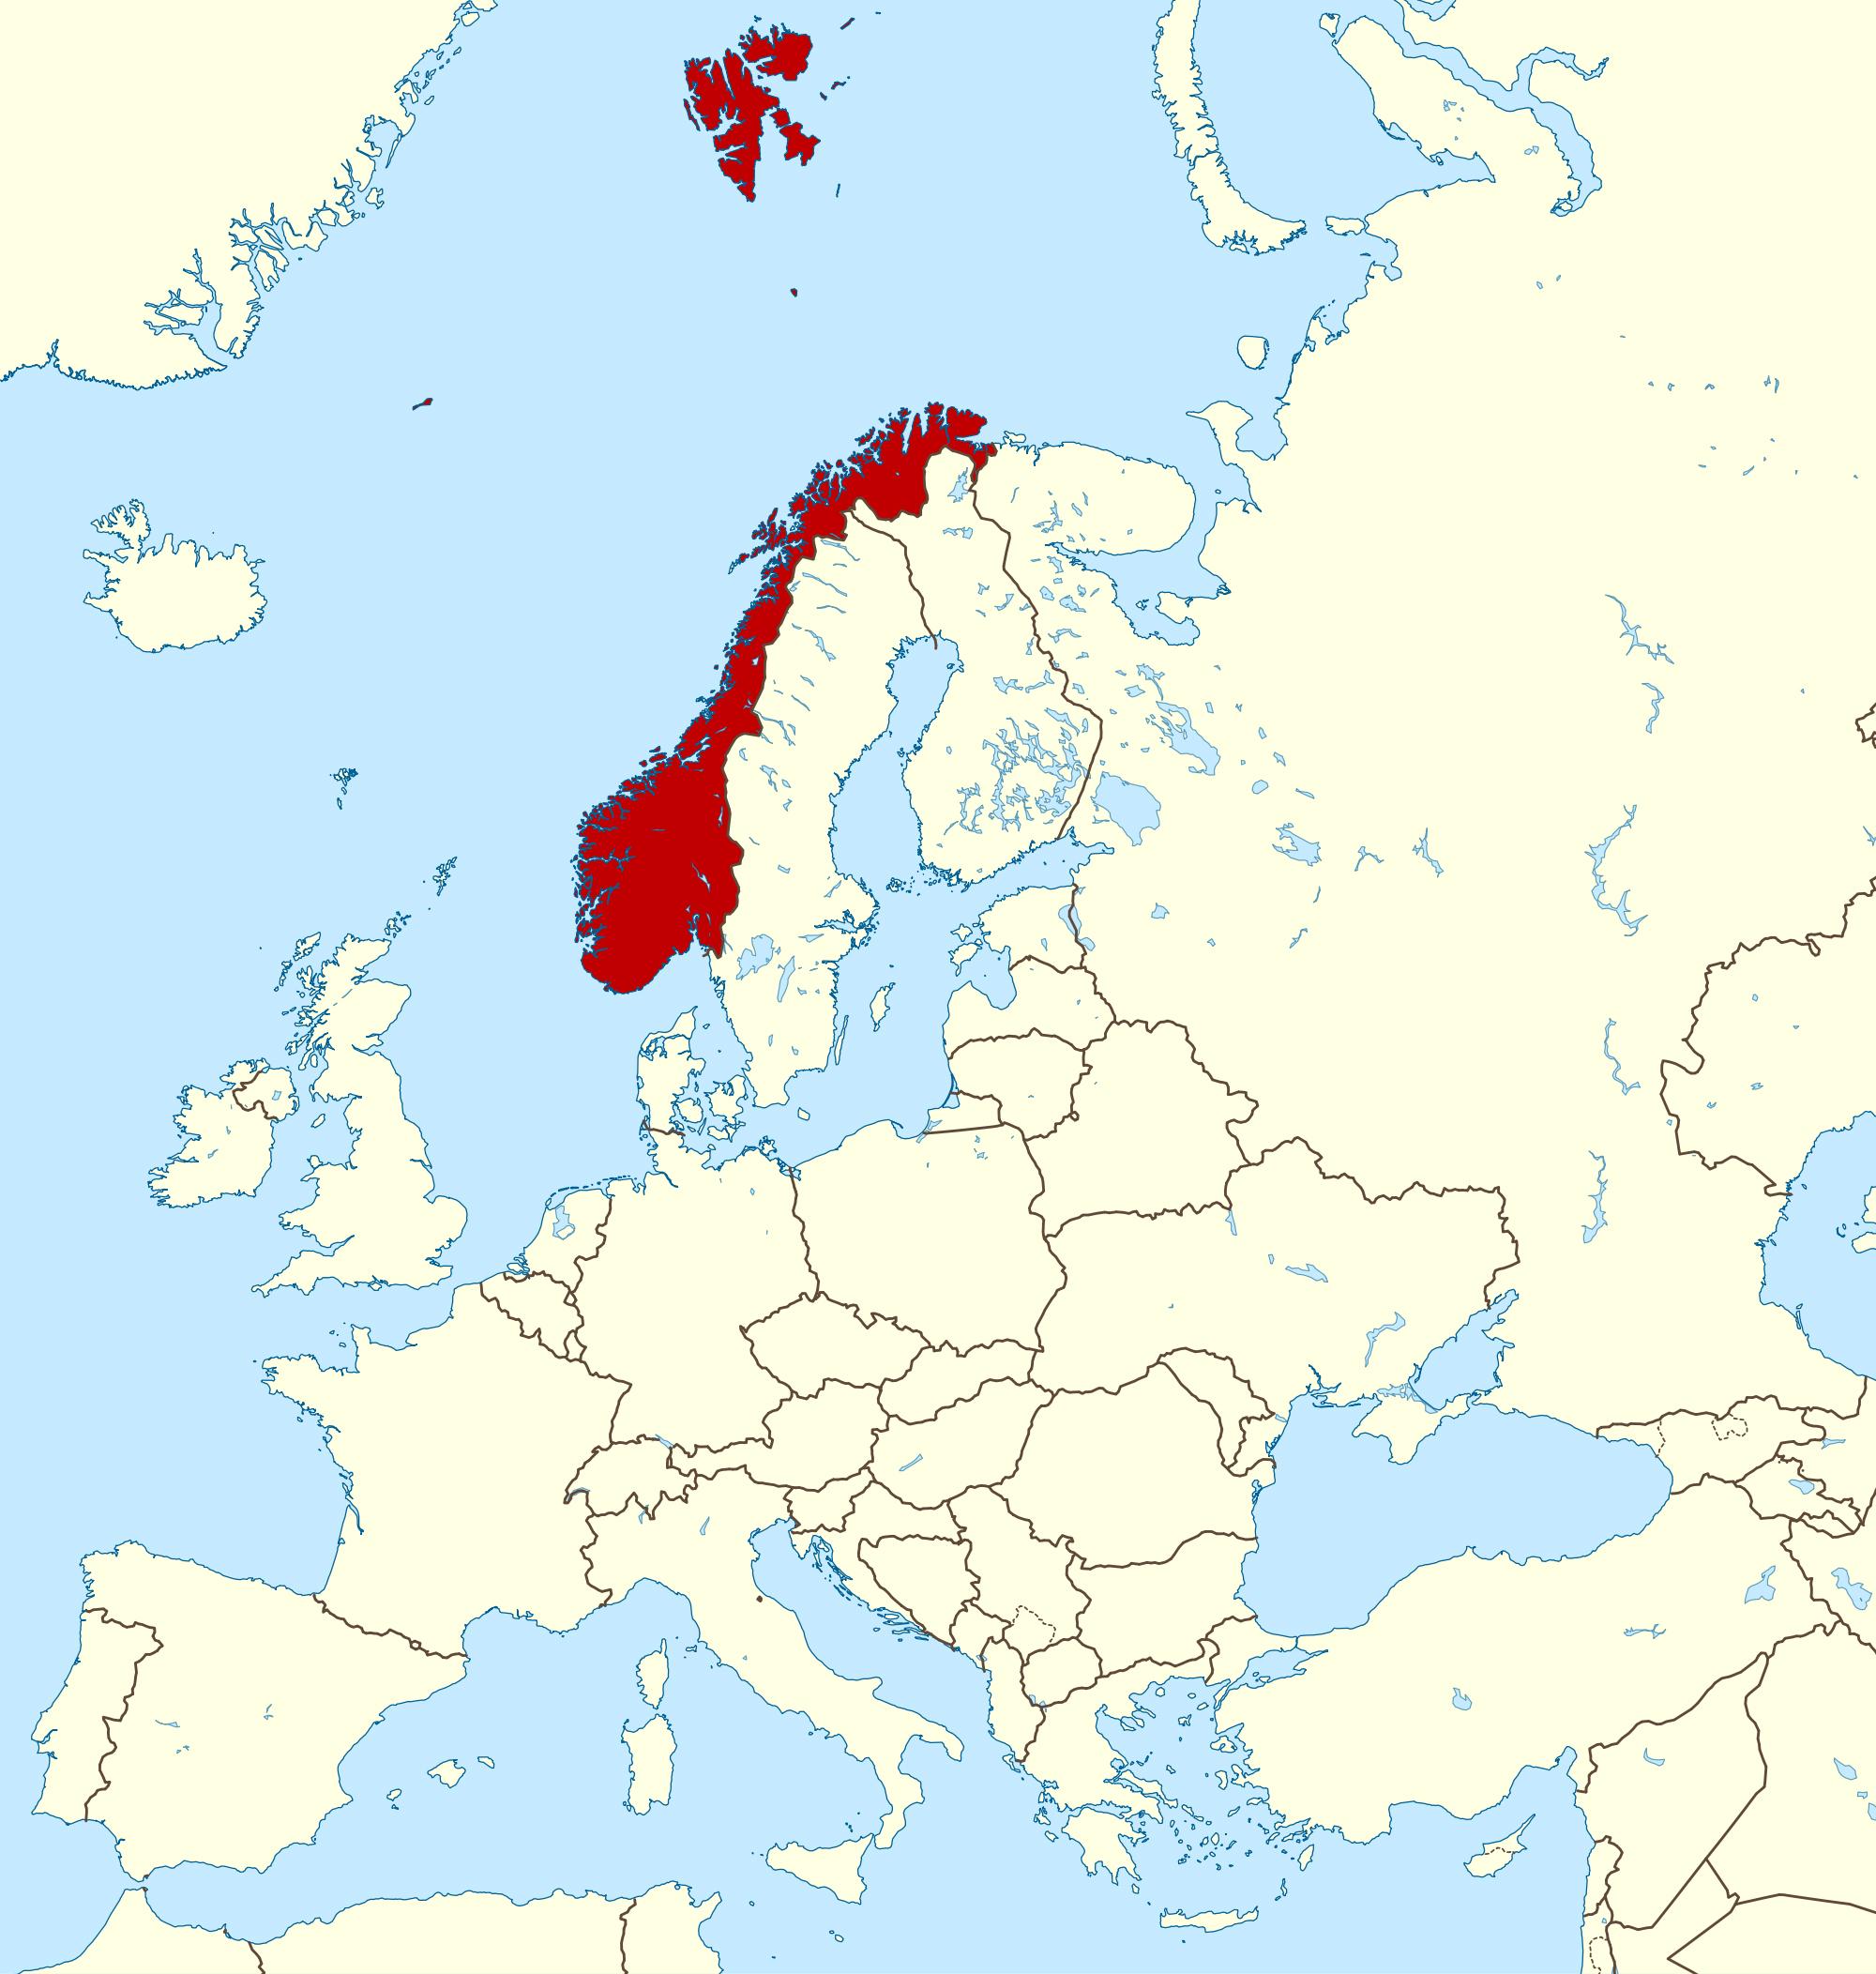 Норвегия относится к европе. Норвегия и Англия на карте. Норвегия на карте выделенная. Норвегия на карте Европы. Норвегия на карте мира.